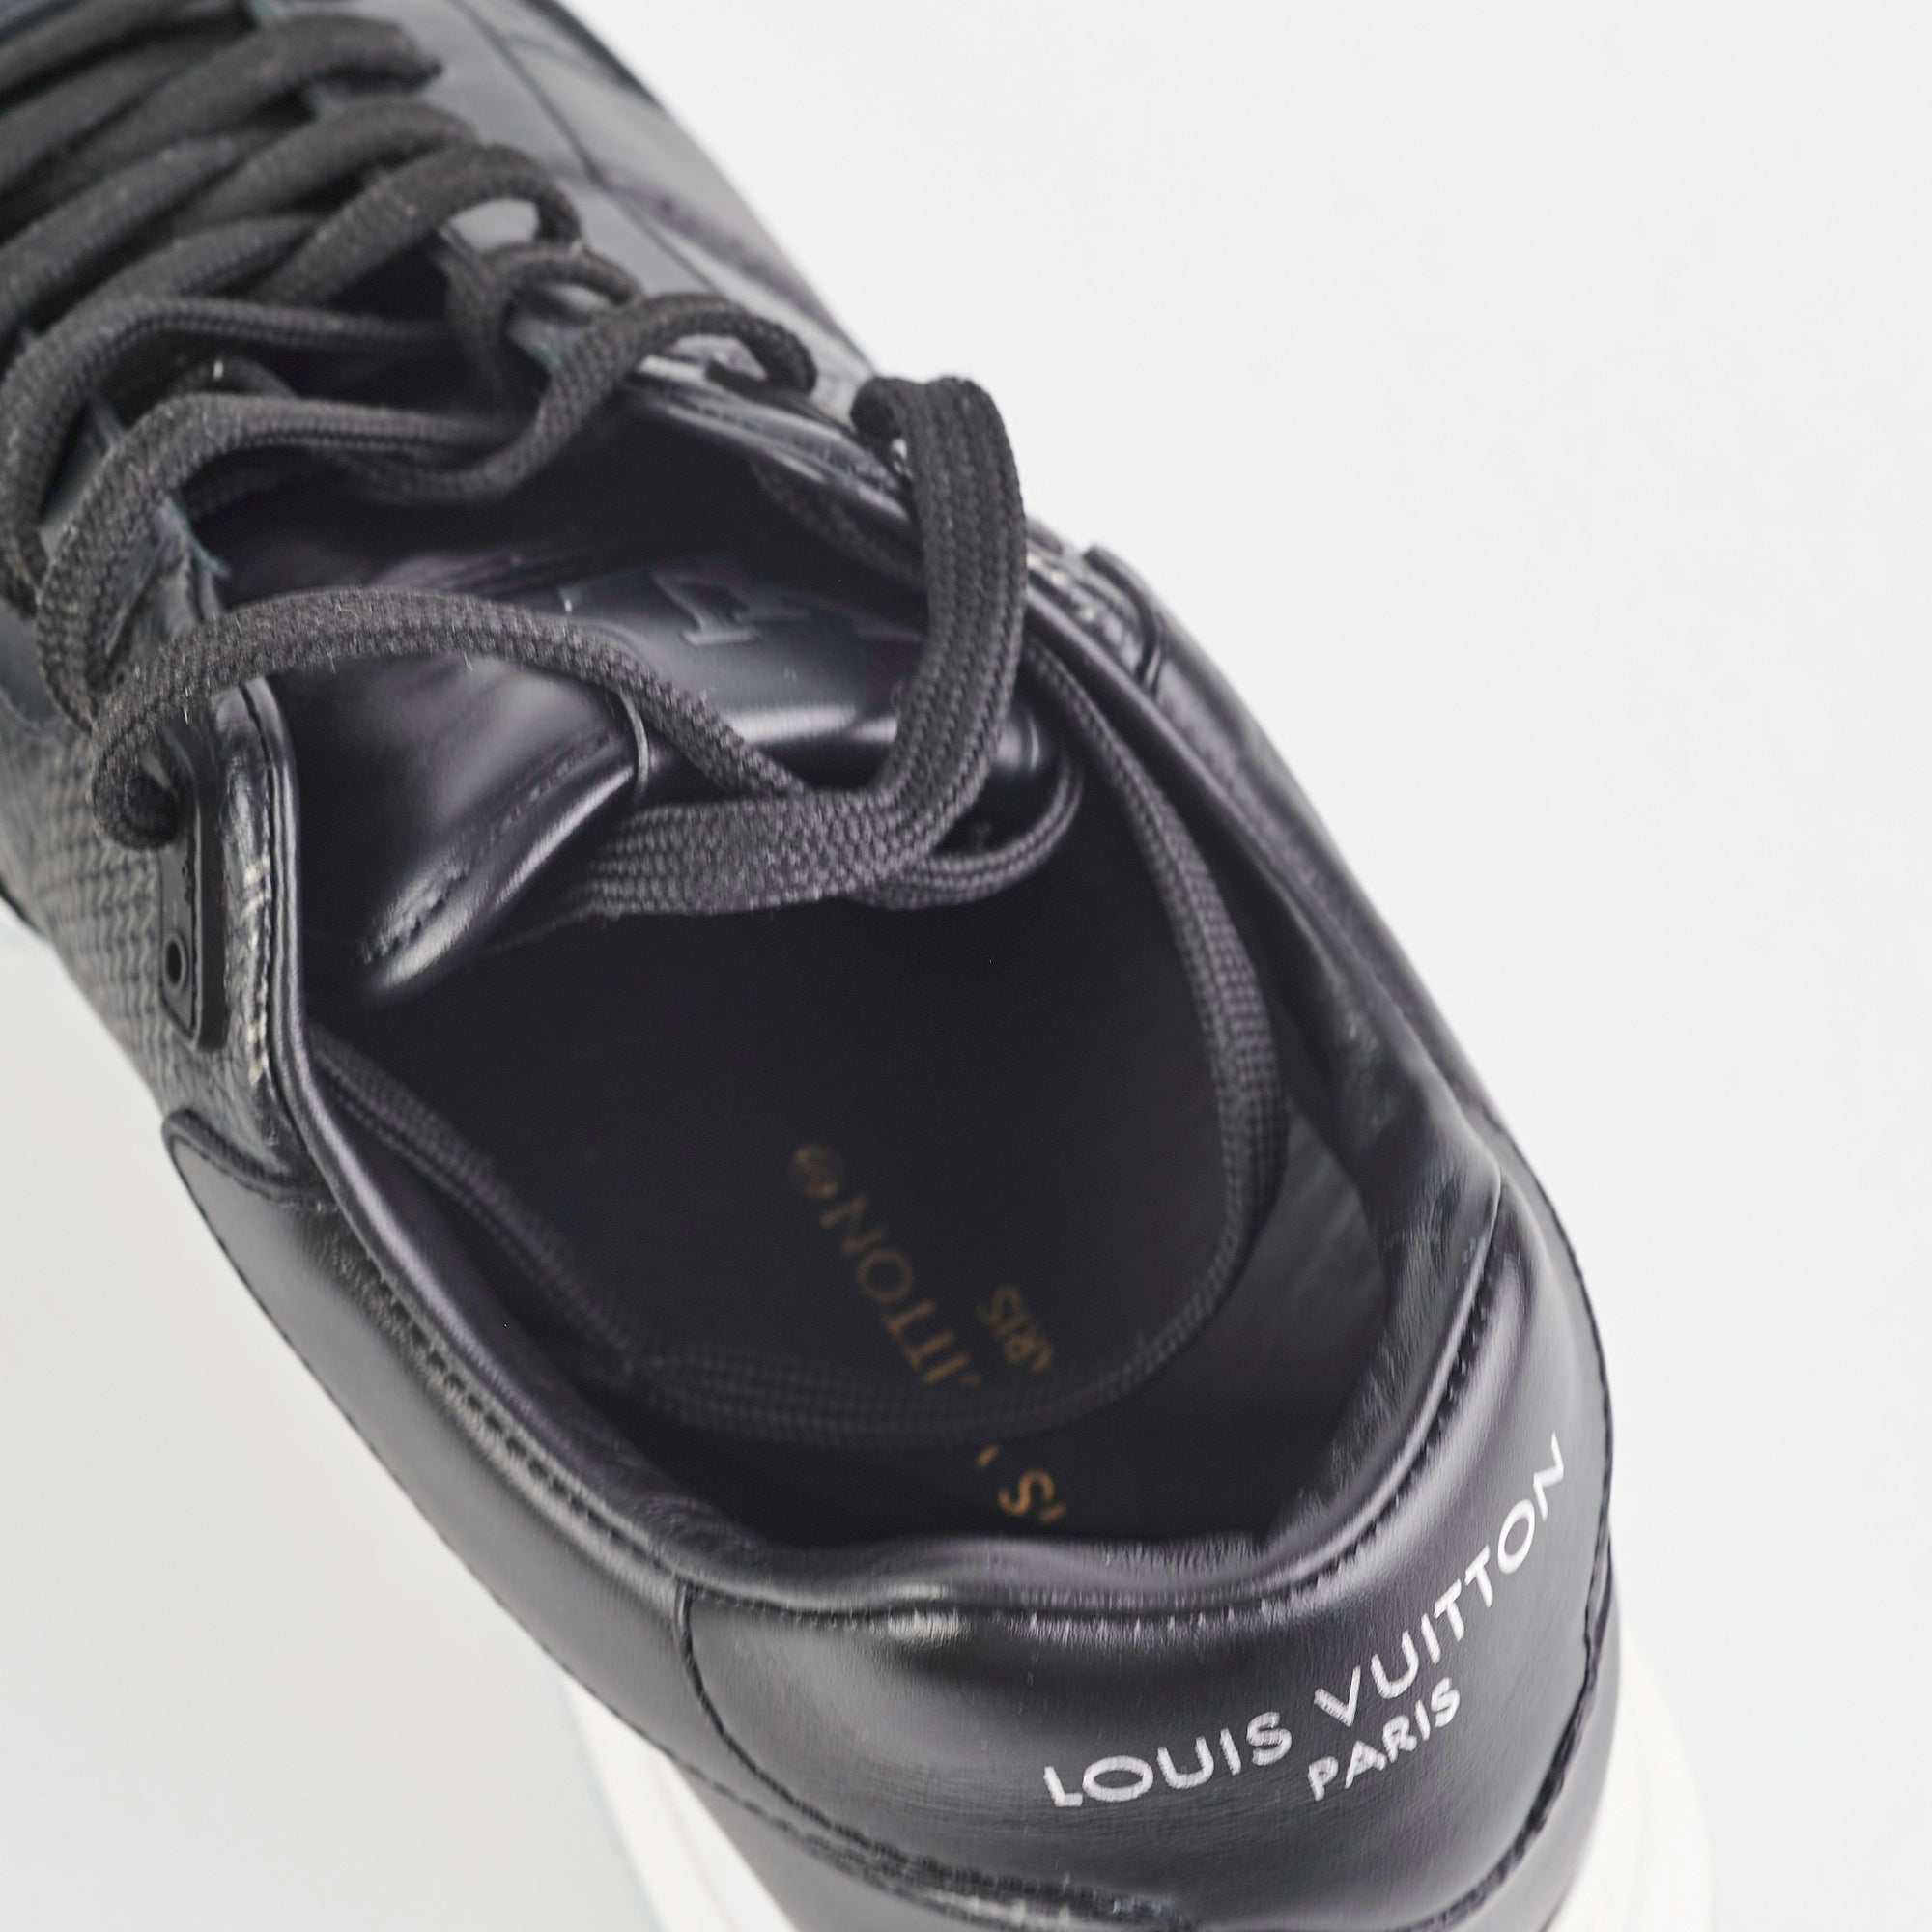 Louis Vuitton Run Away Men's Sneakers Black 6.5 UK - THE PURSE AFFAIR